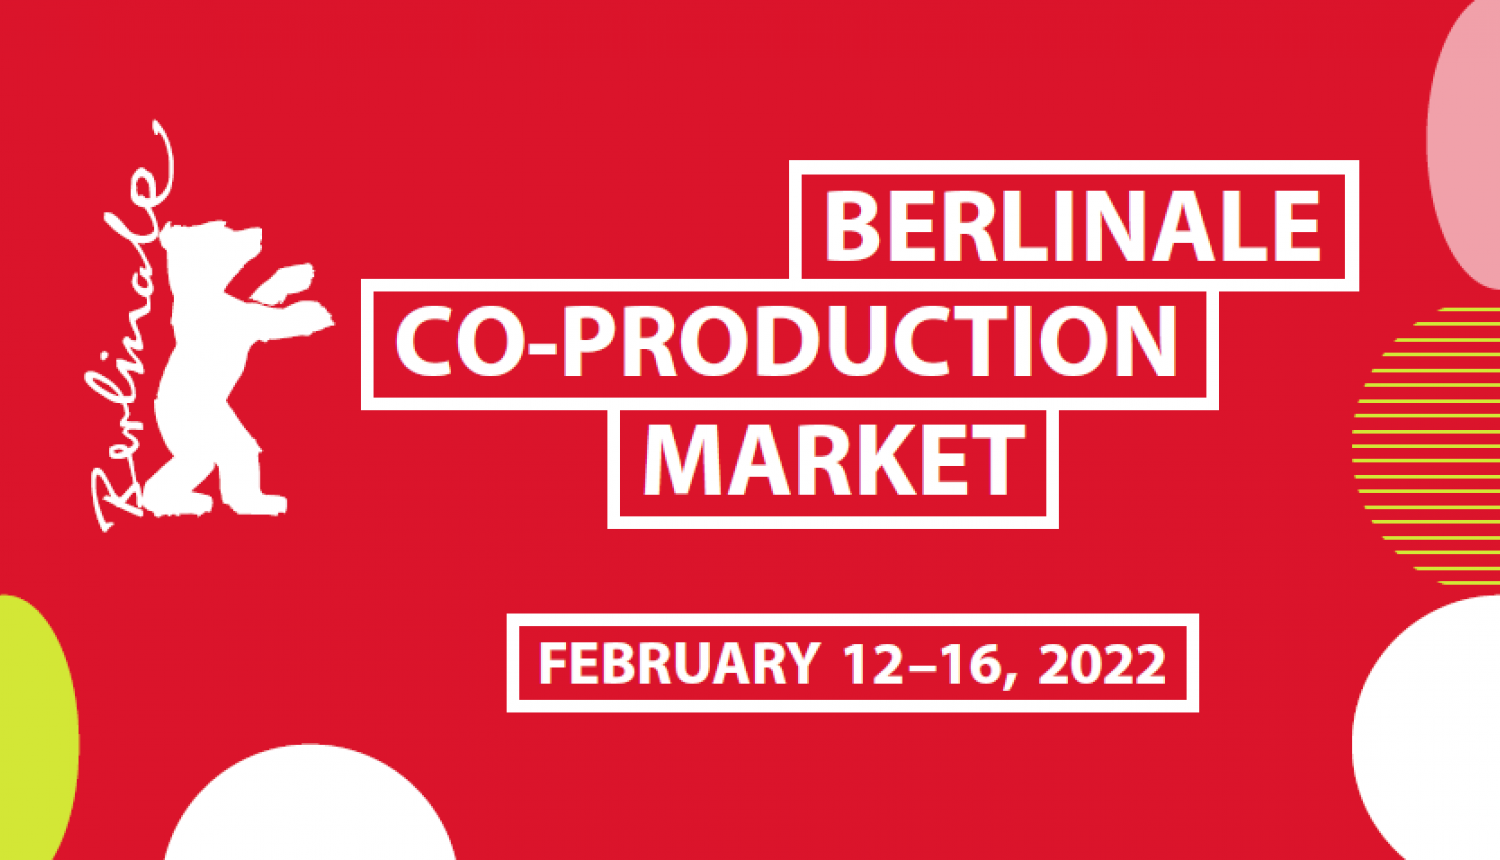 Berlinale Co-Production Market 2022